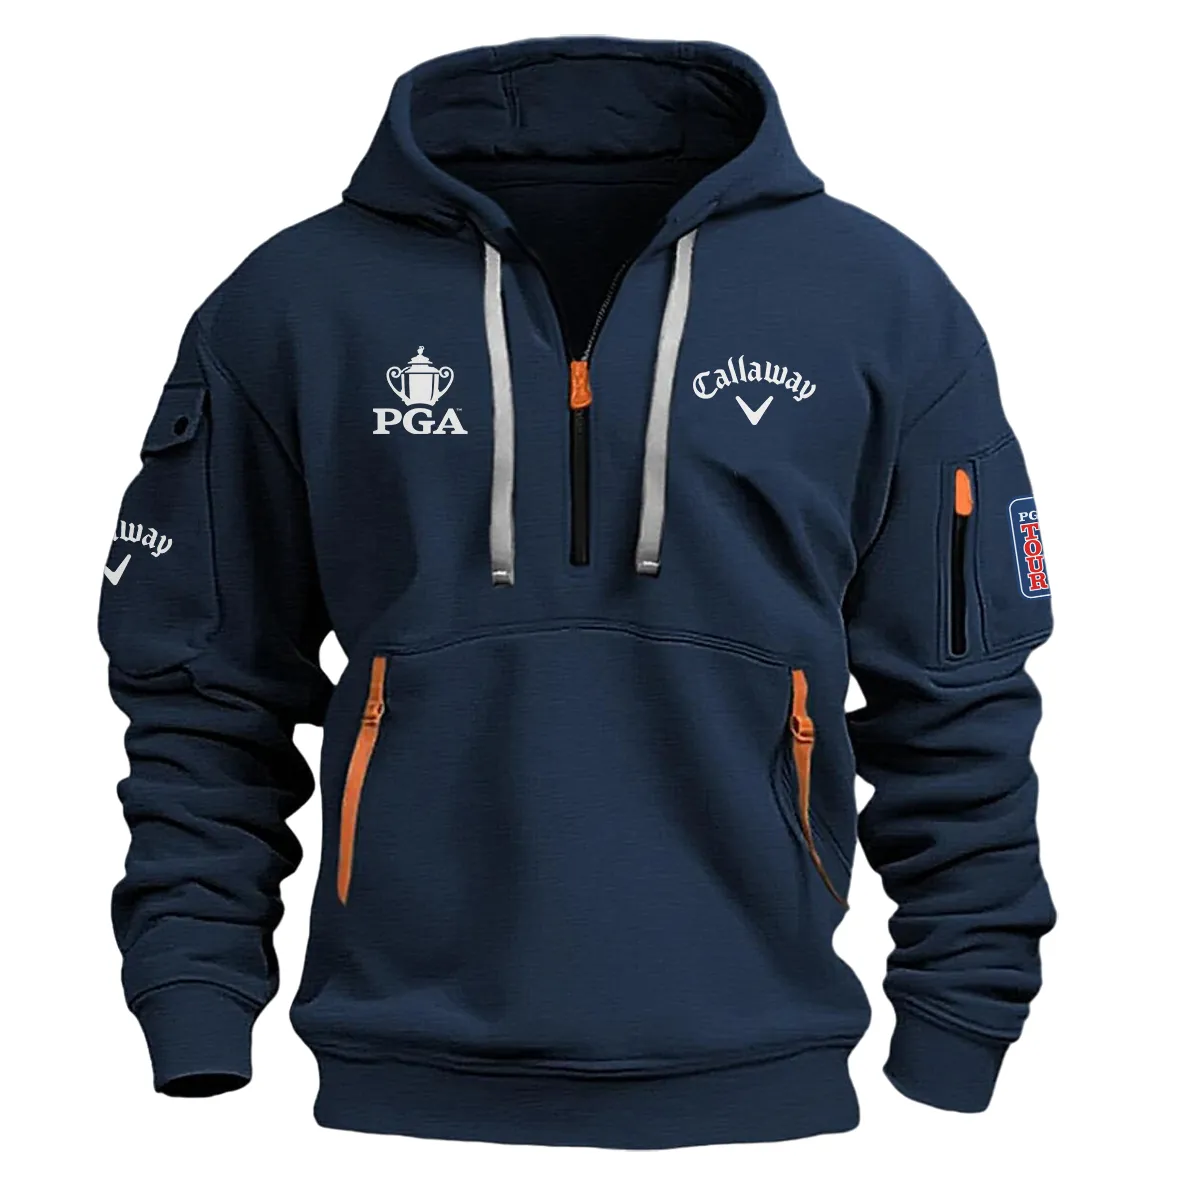 Navy Color Brand Rolex Hoodie Half Zipper PGA Championship Gift For Fans